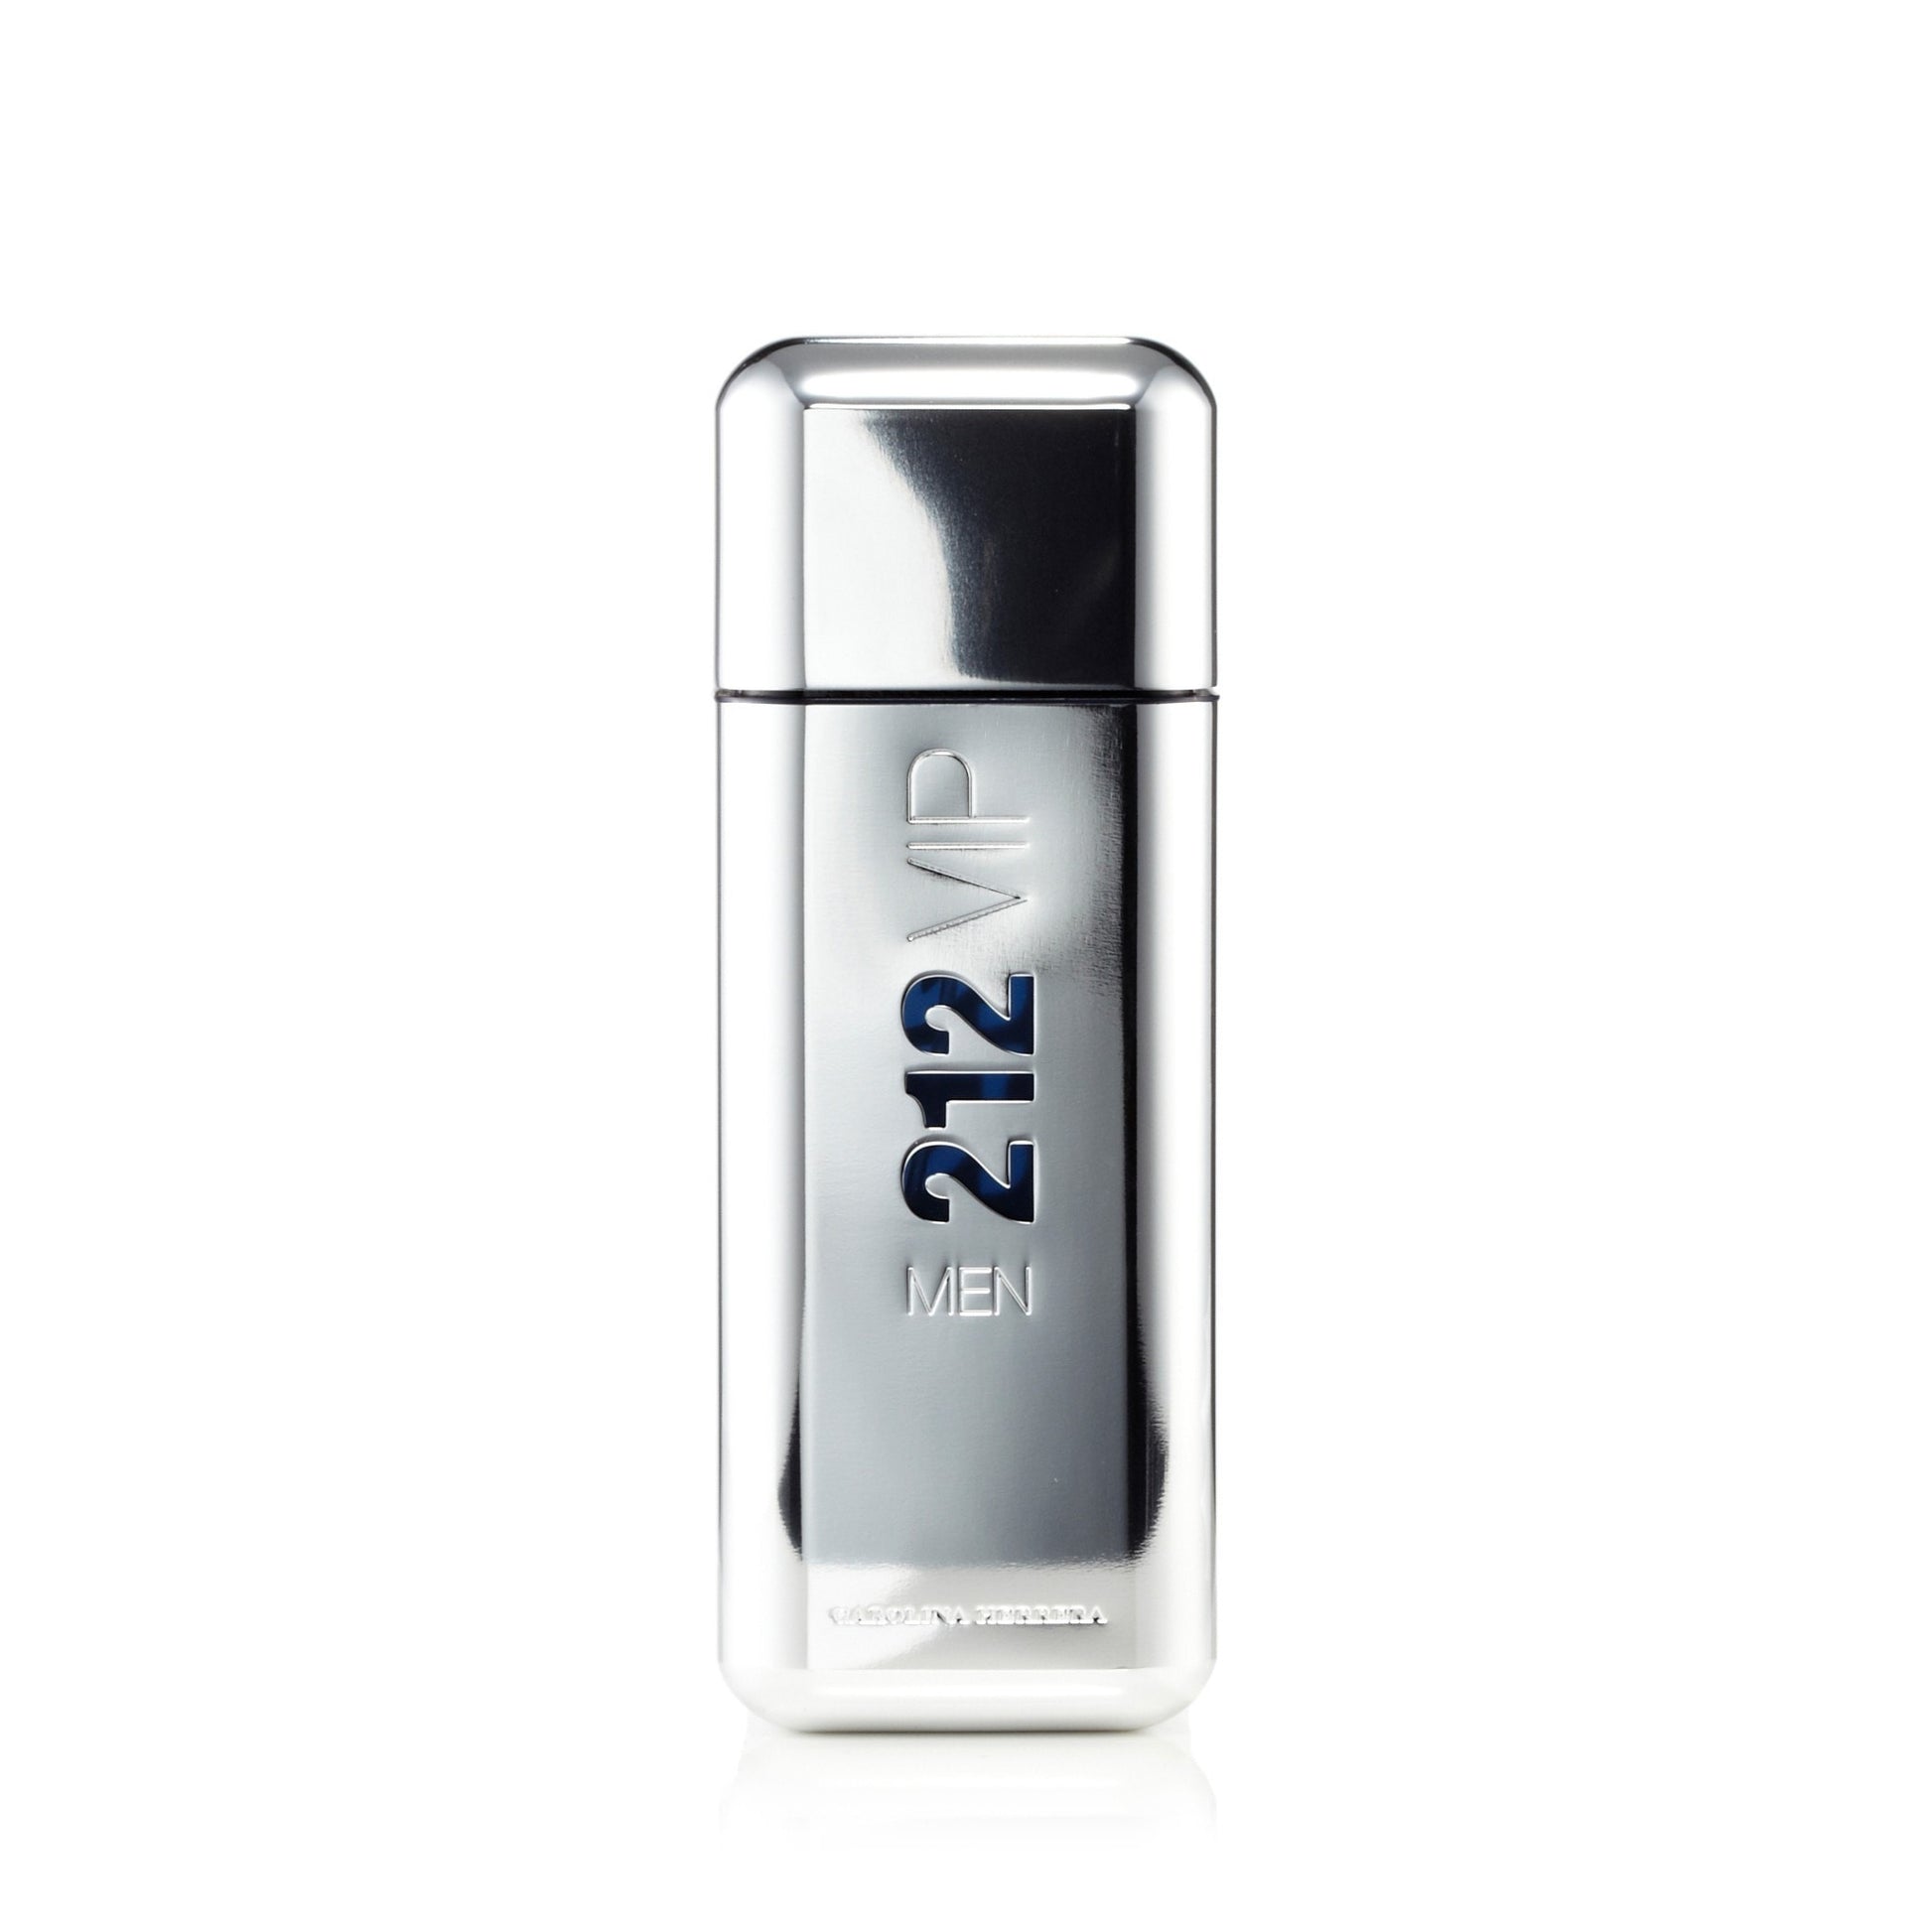 212 Vip Men Eau de Toilette Spray for Men by Carolina Herrera 3.4 oz. Click to open in modal